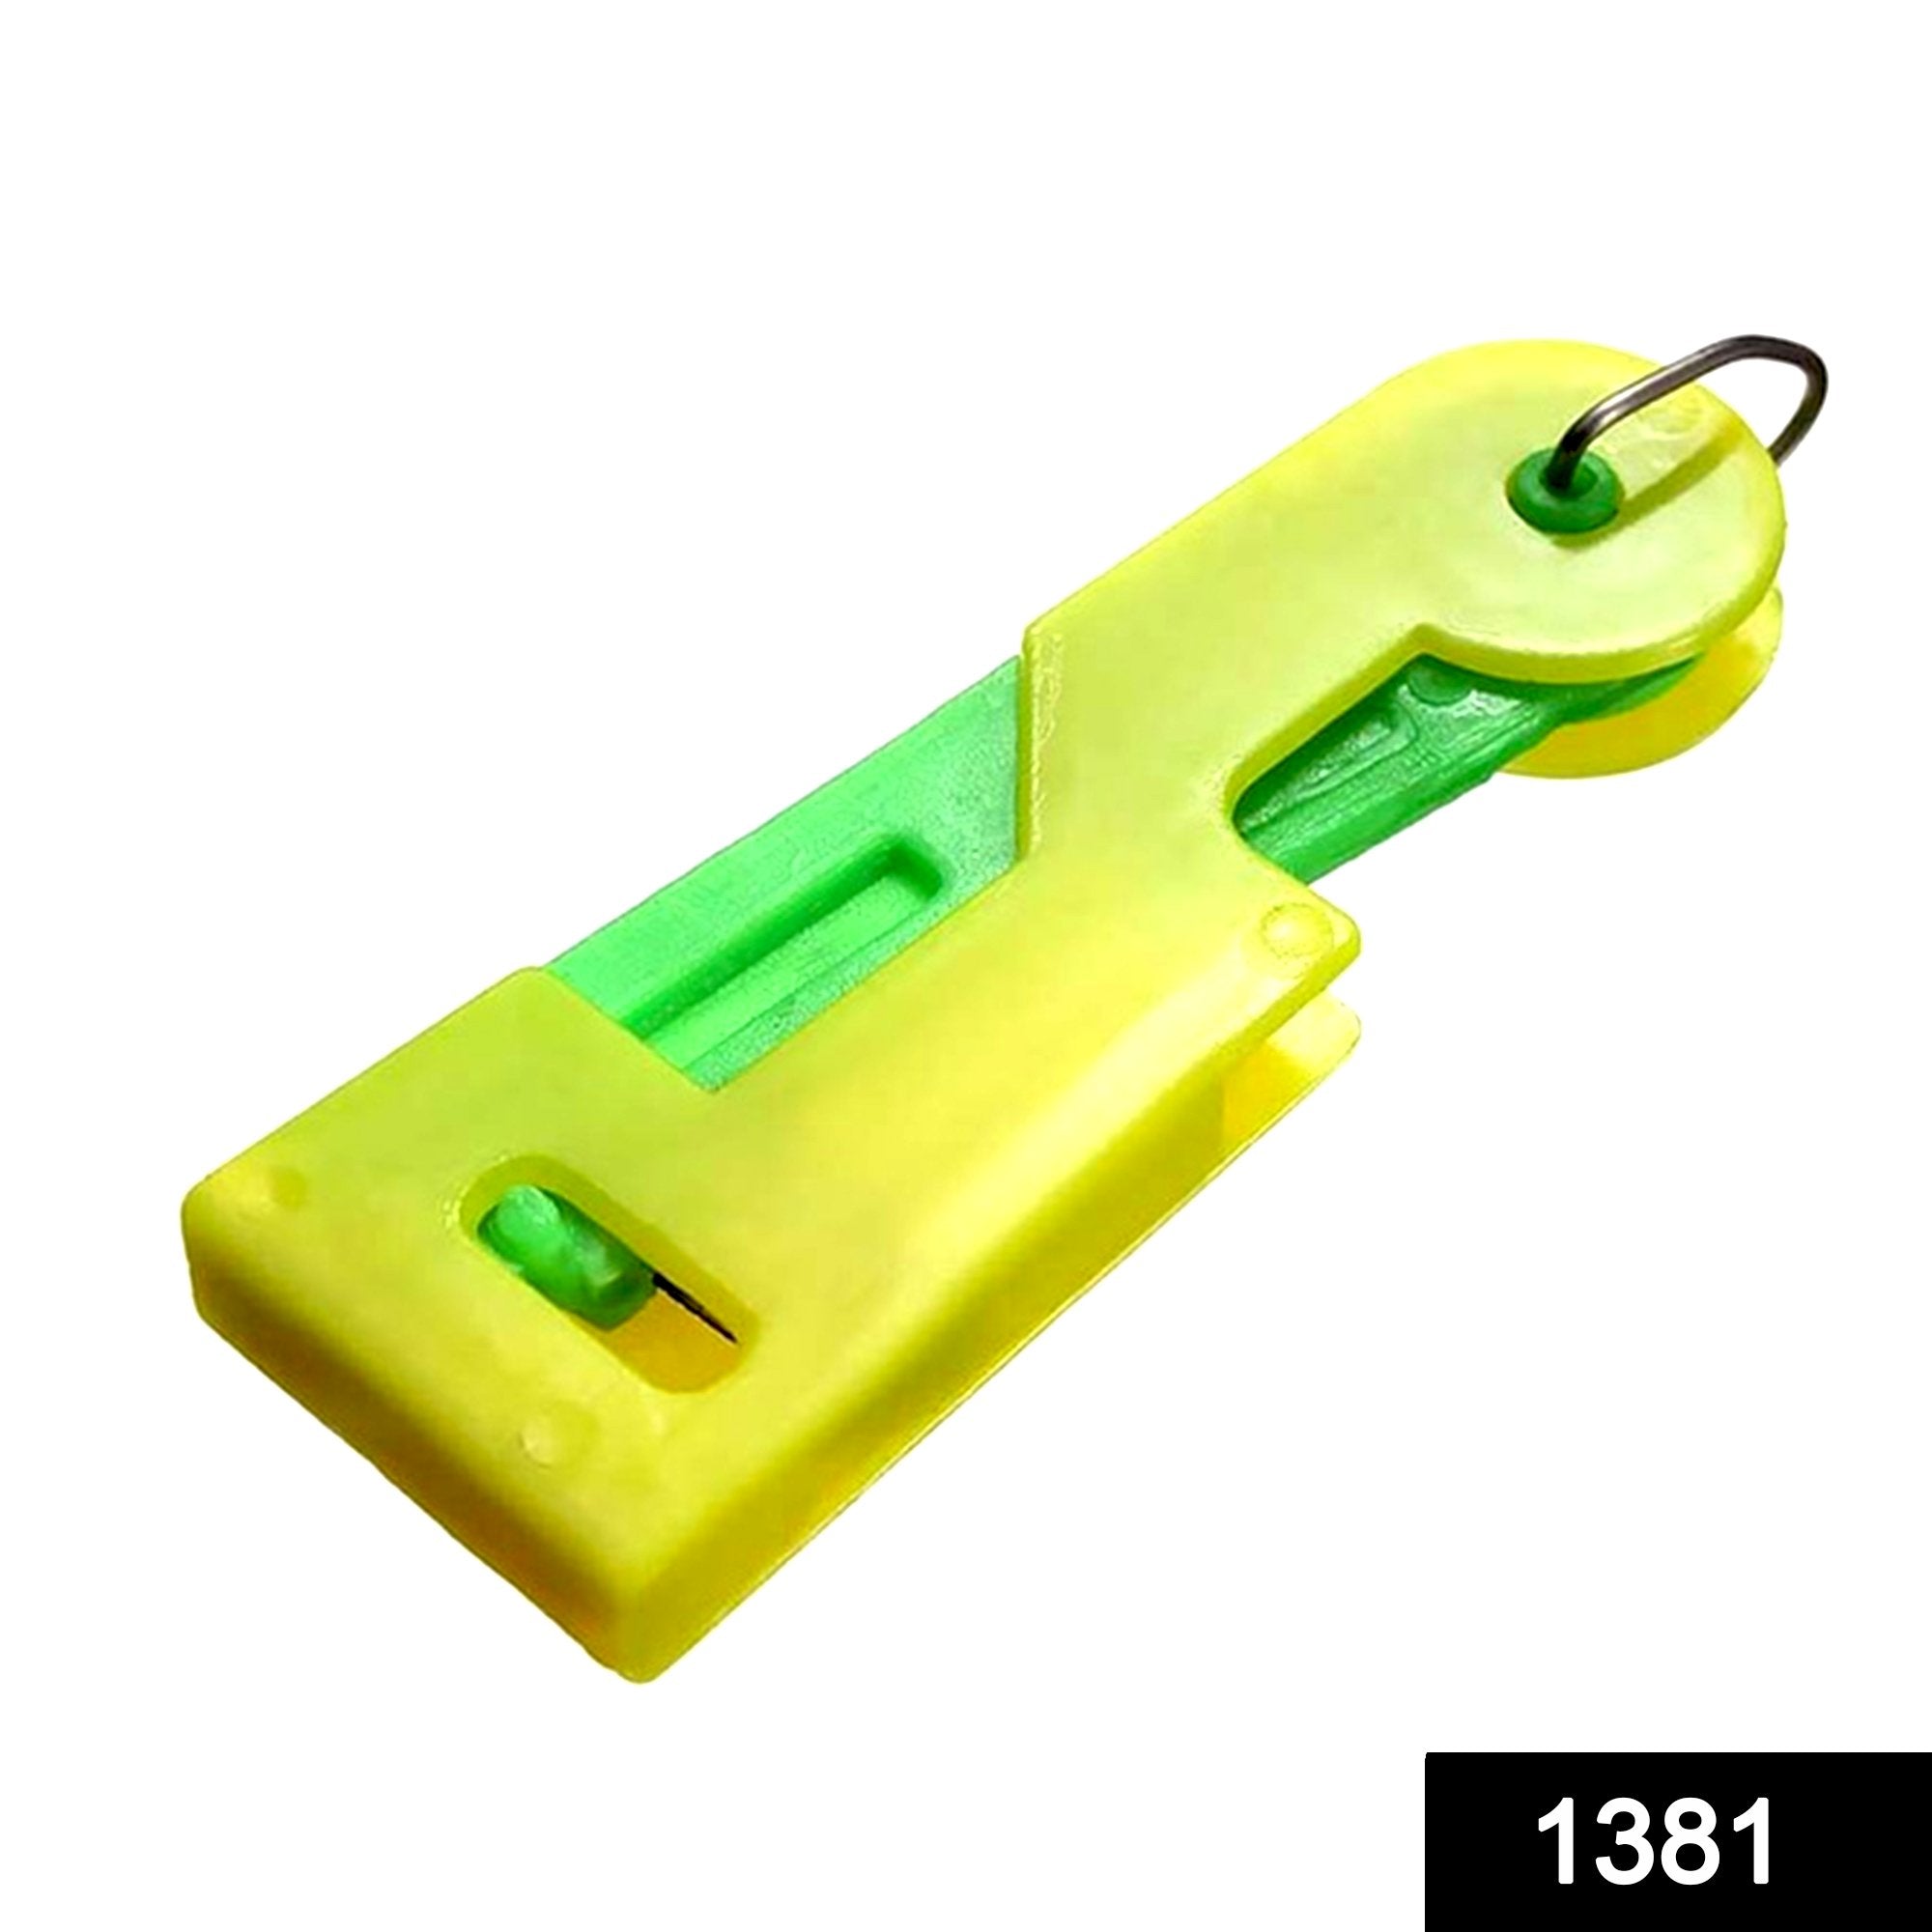 1381 Automatic Needle Threading Device (Multicolour) - SkyShopy